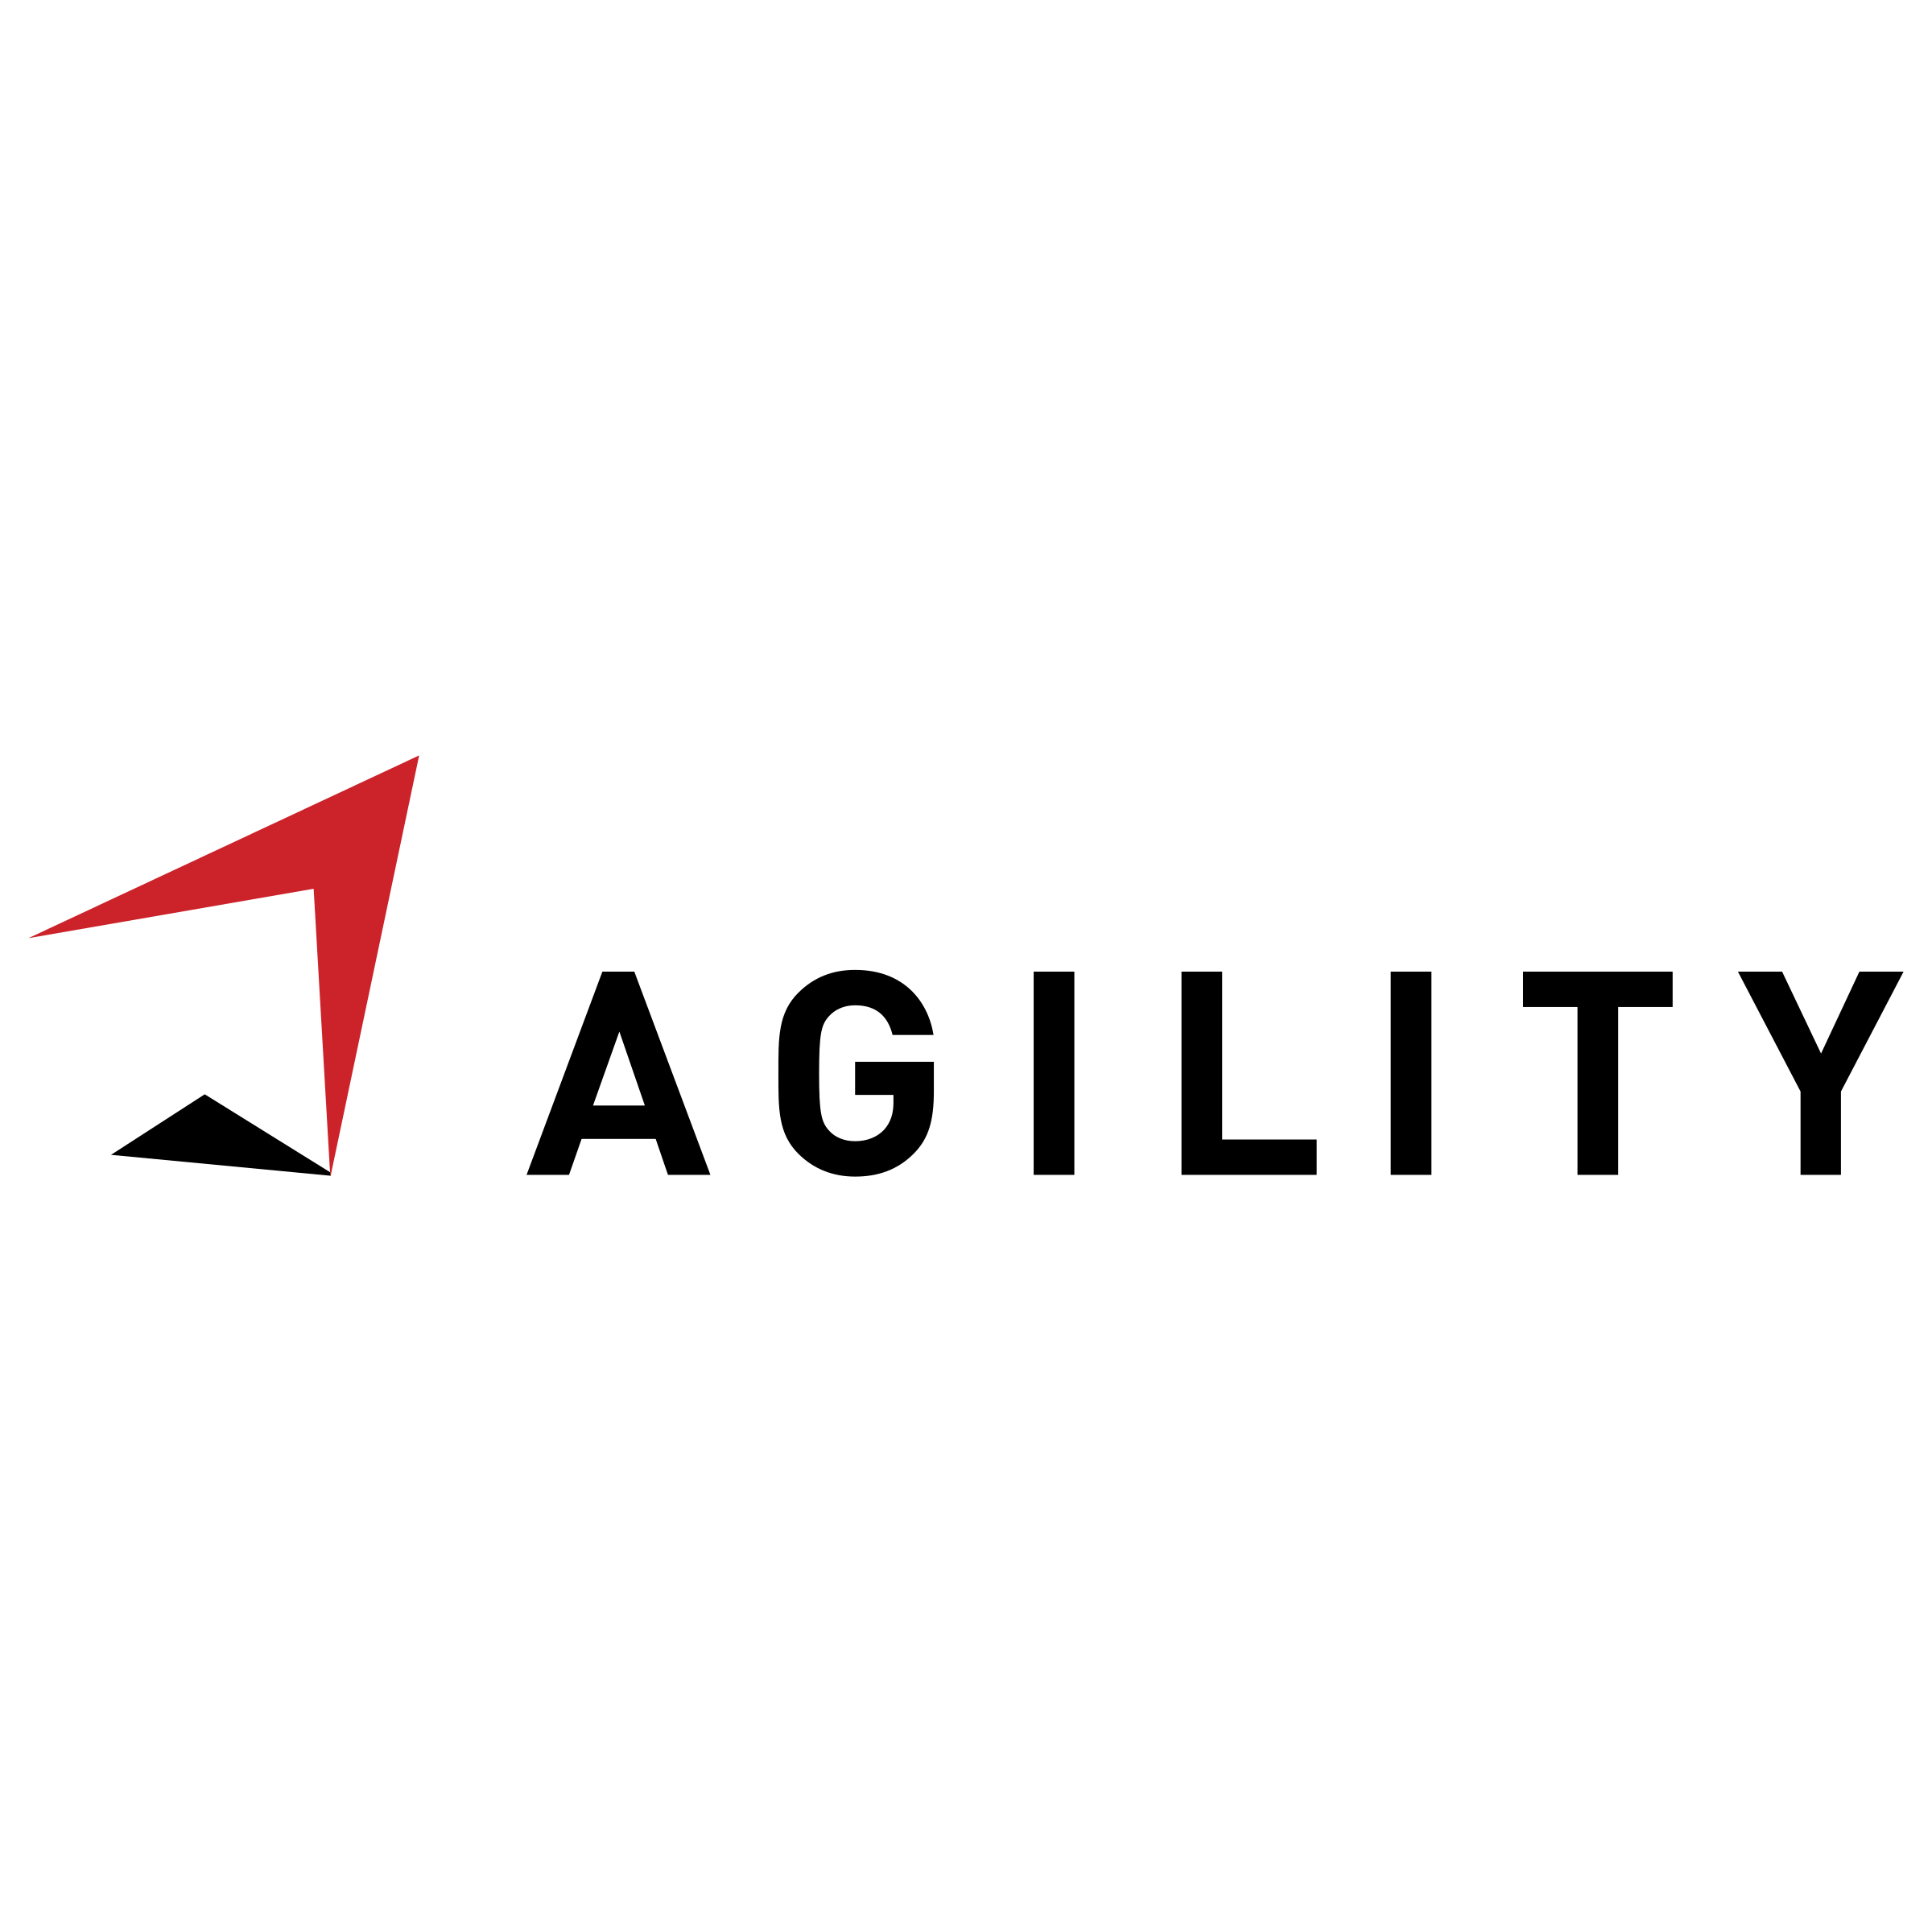 Agility Logo - Agility Logo PNG Transparent & SVG Vector - Freebie Supply